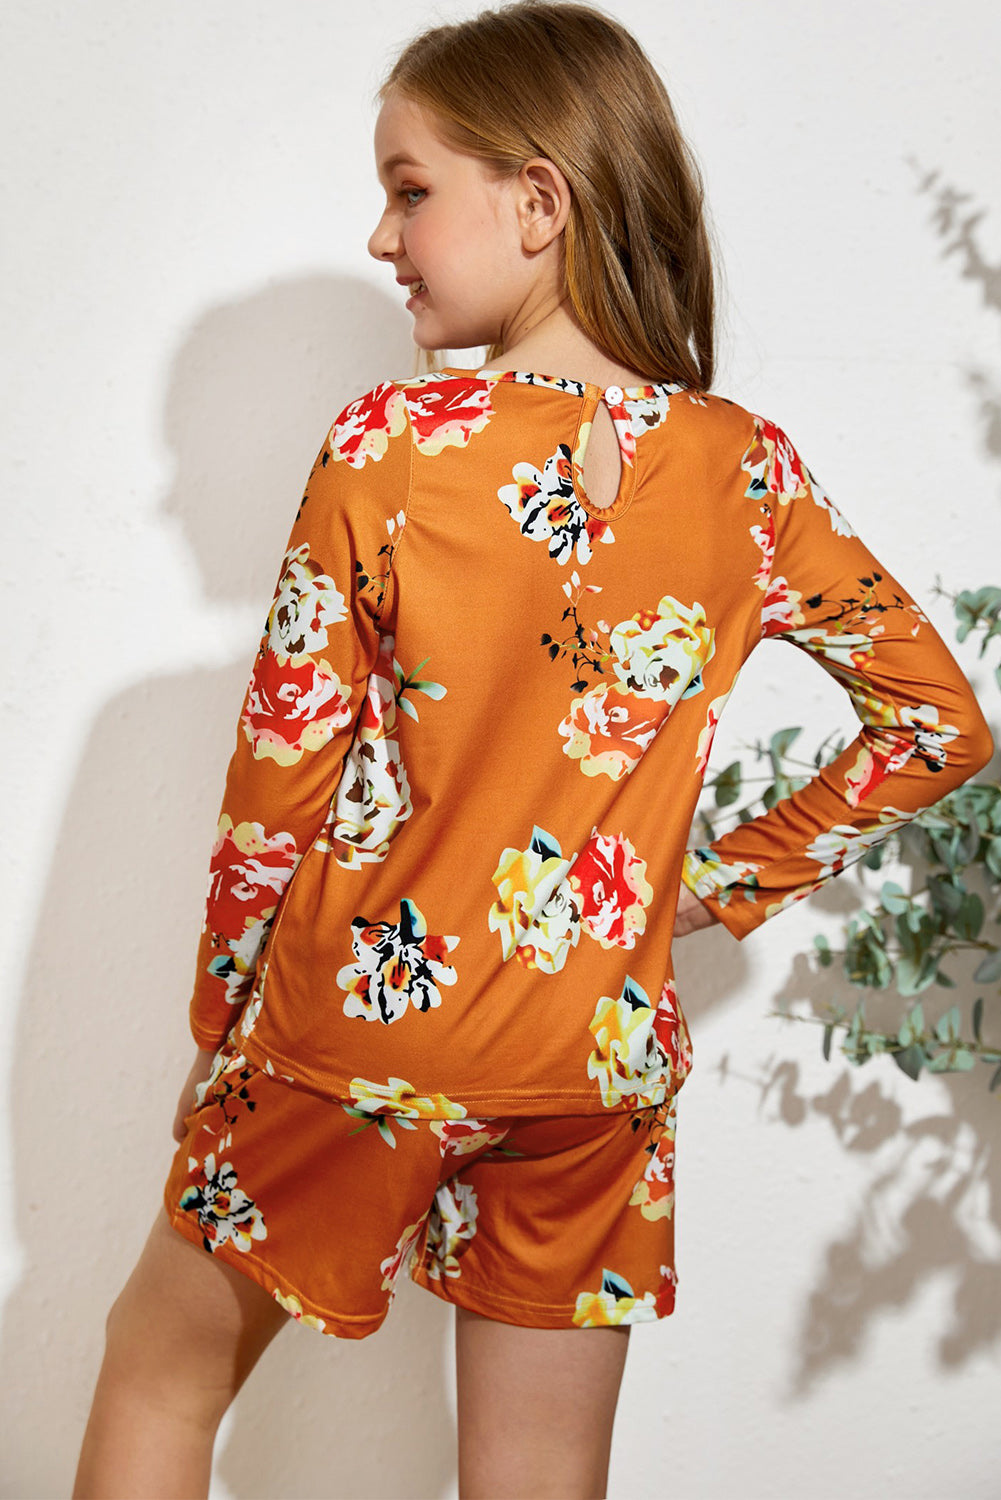 Girls Floral Long Sleeve Top and Shorts Set - DromedarShop.com Online Boutique